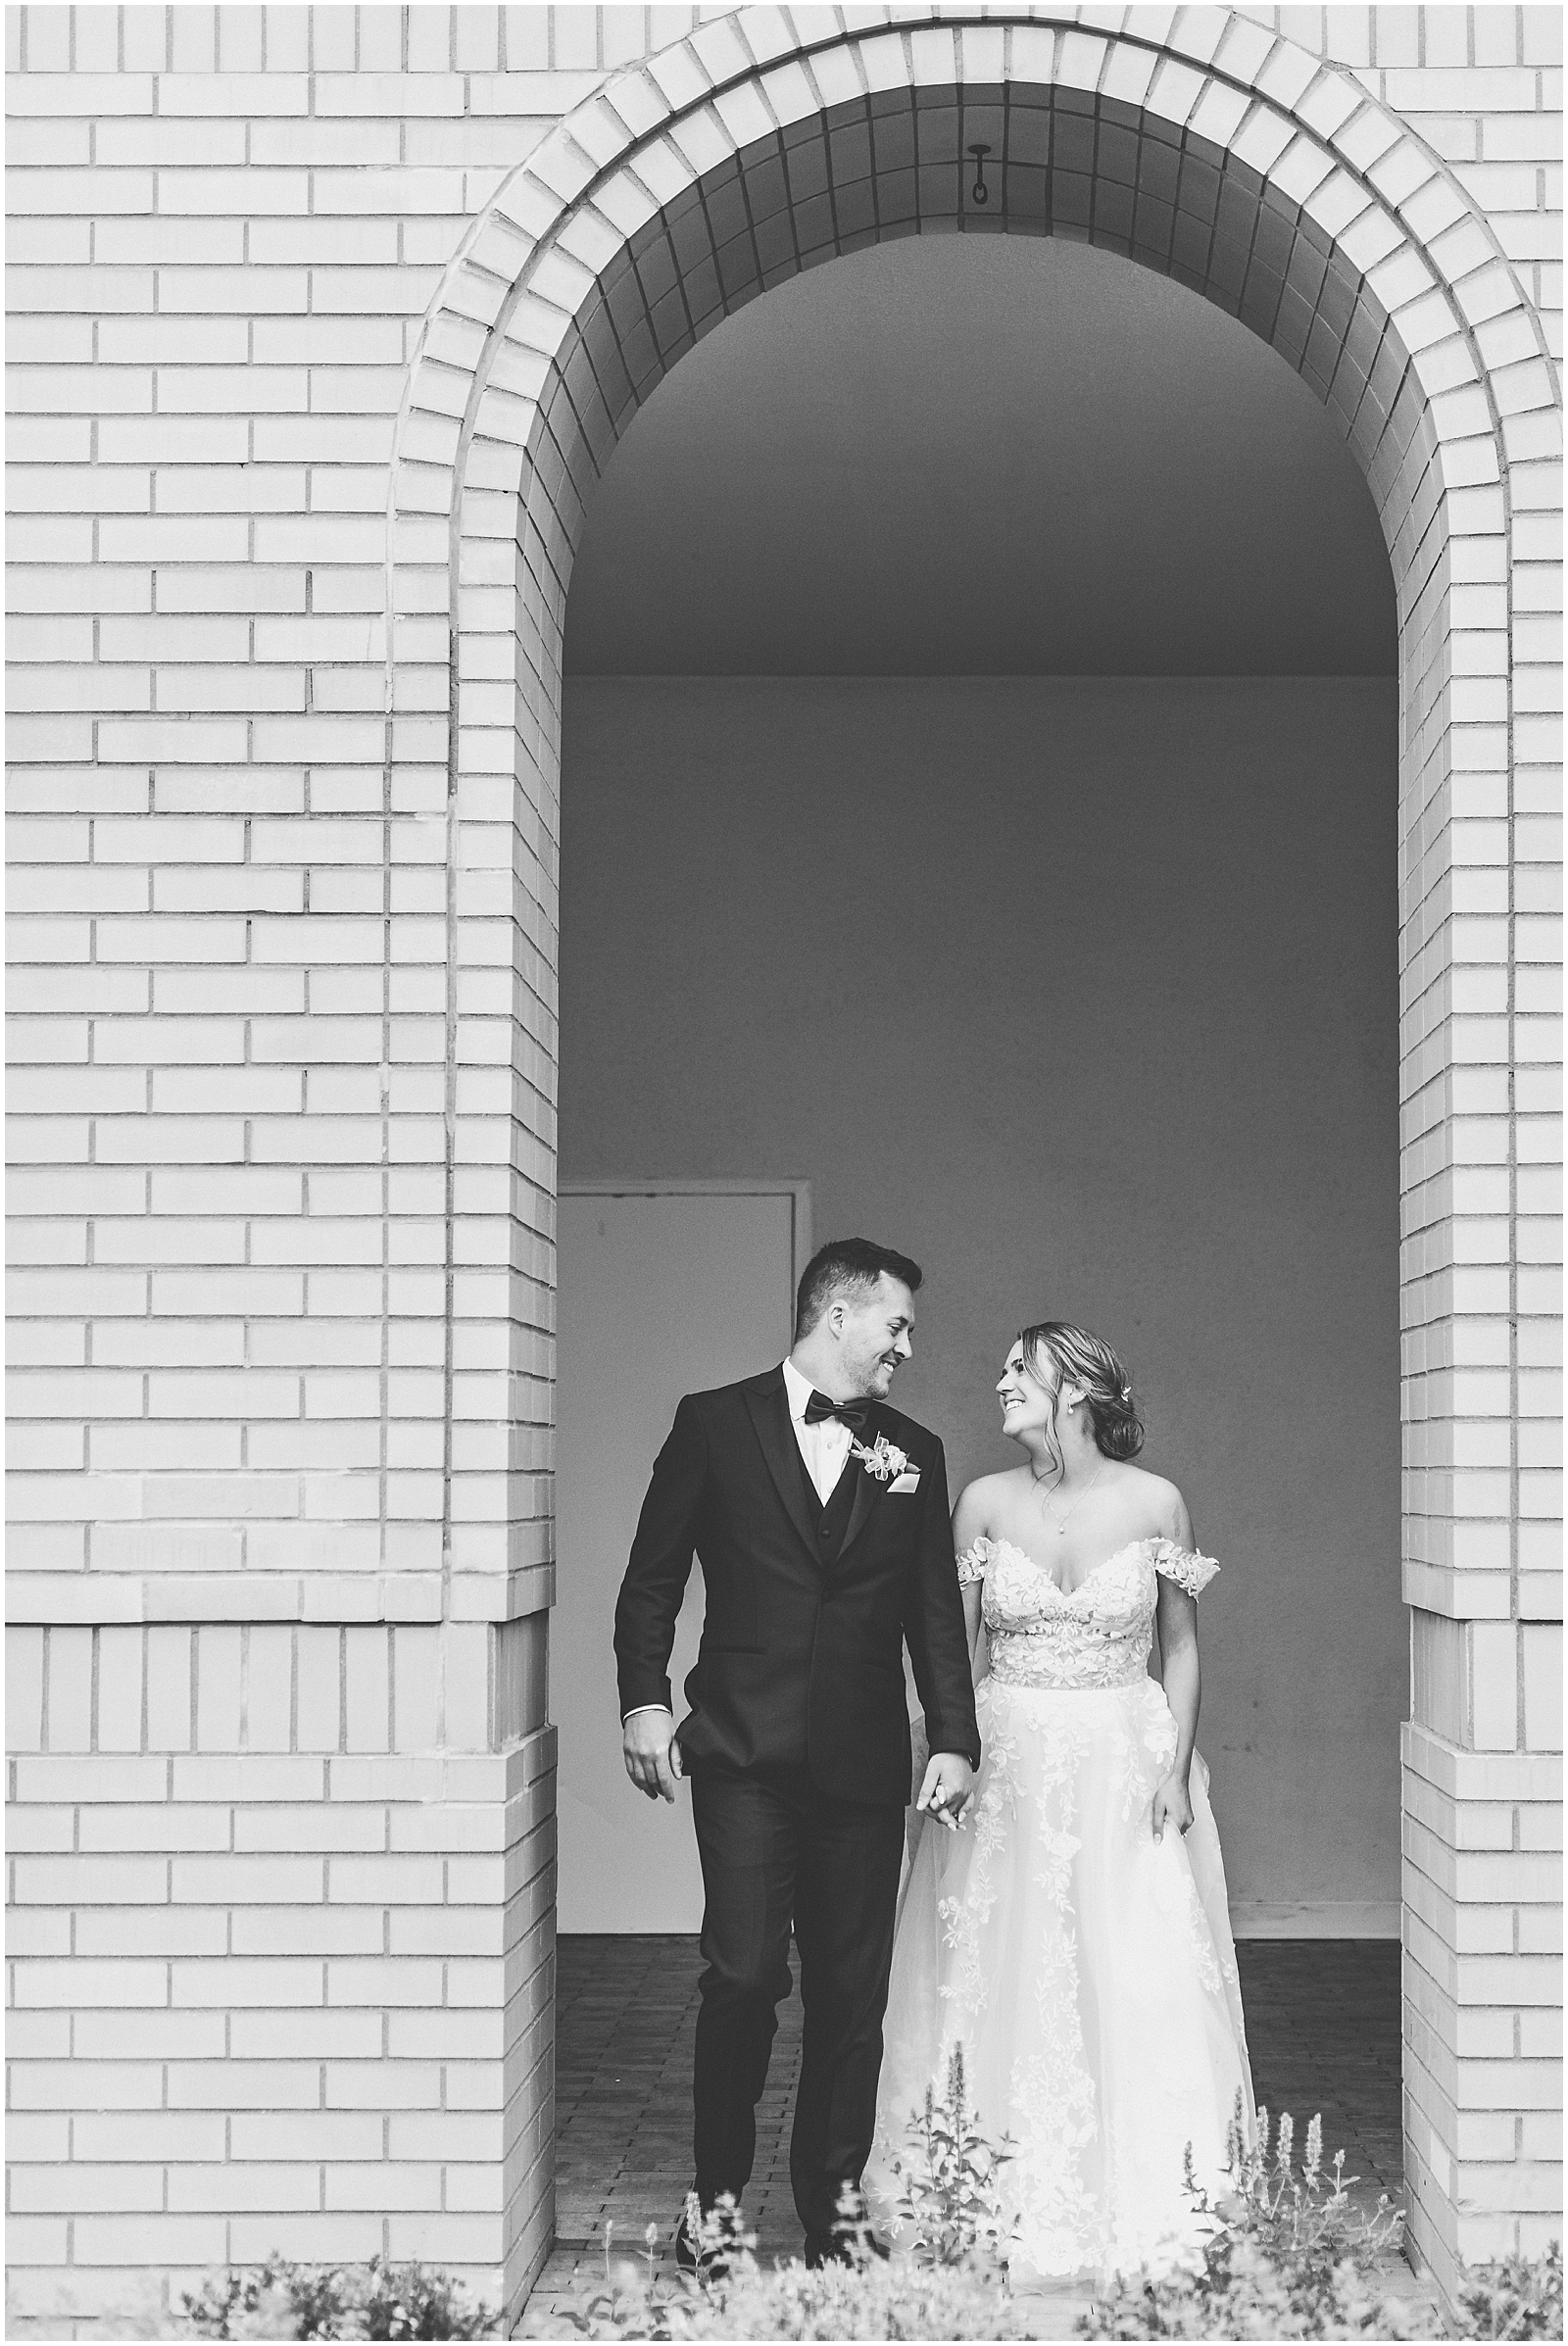 Michele and Timmy's summer wedding day at the Hyatt Regency Schaumburg with Chicagoland wedding photographer Kara Evans Photographer.